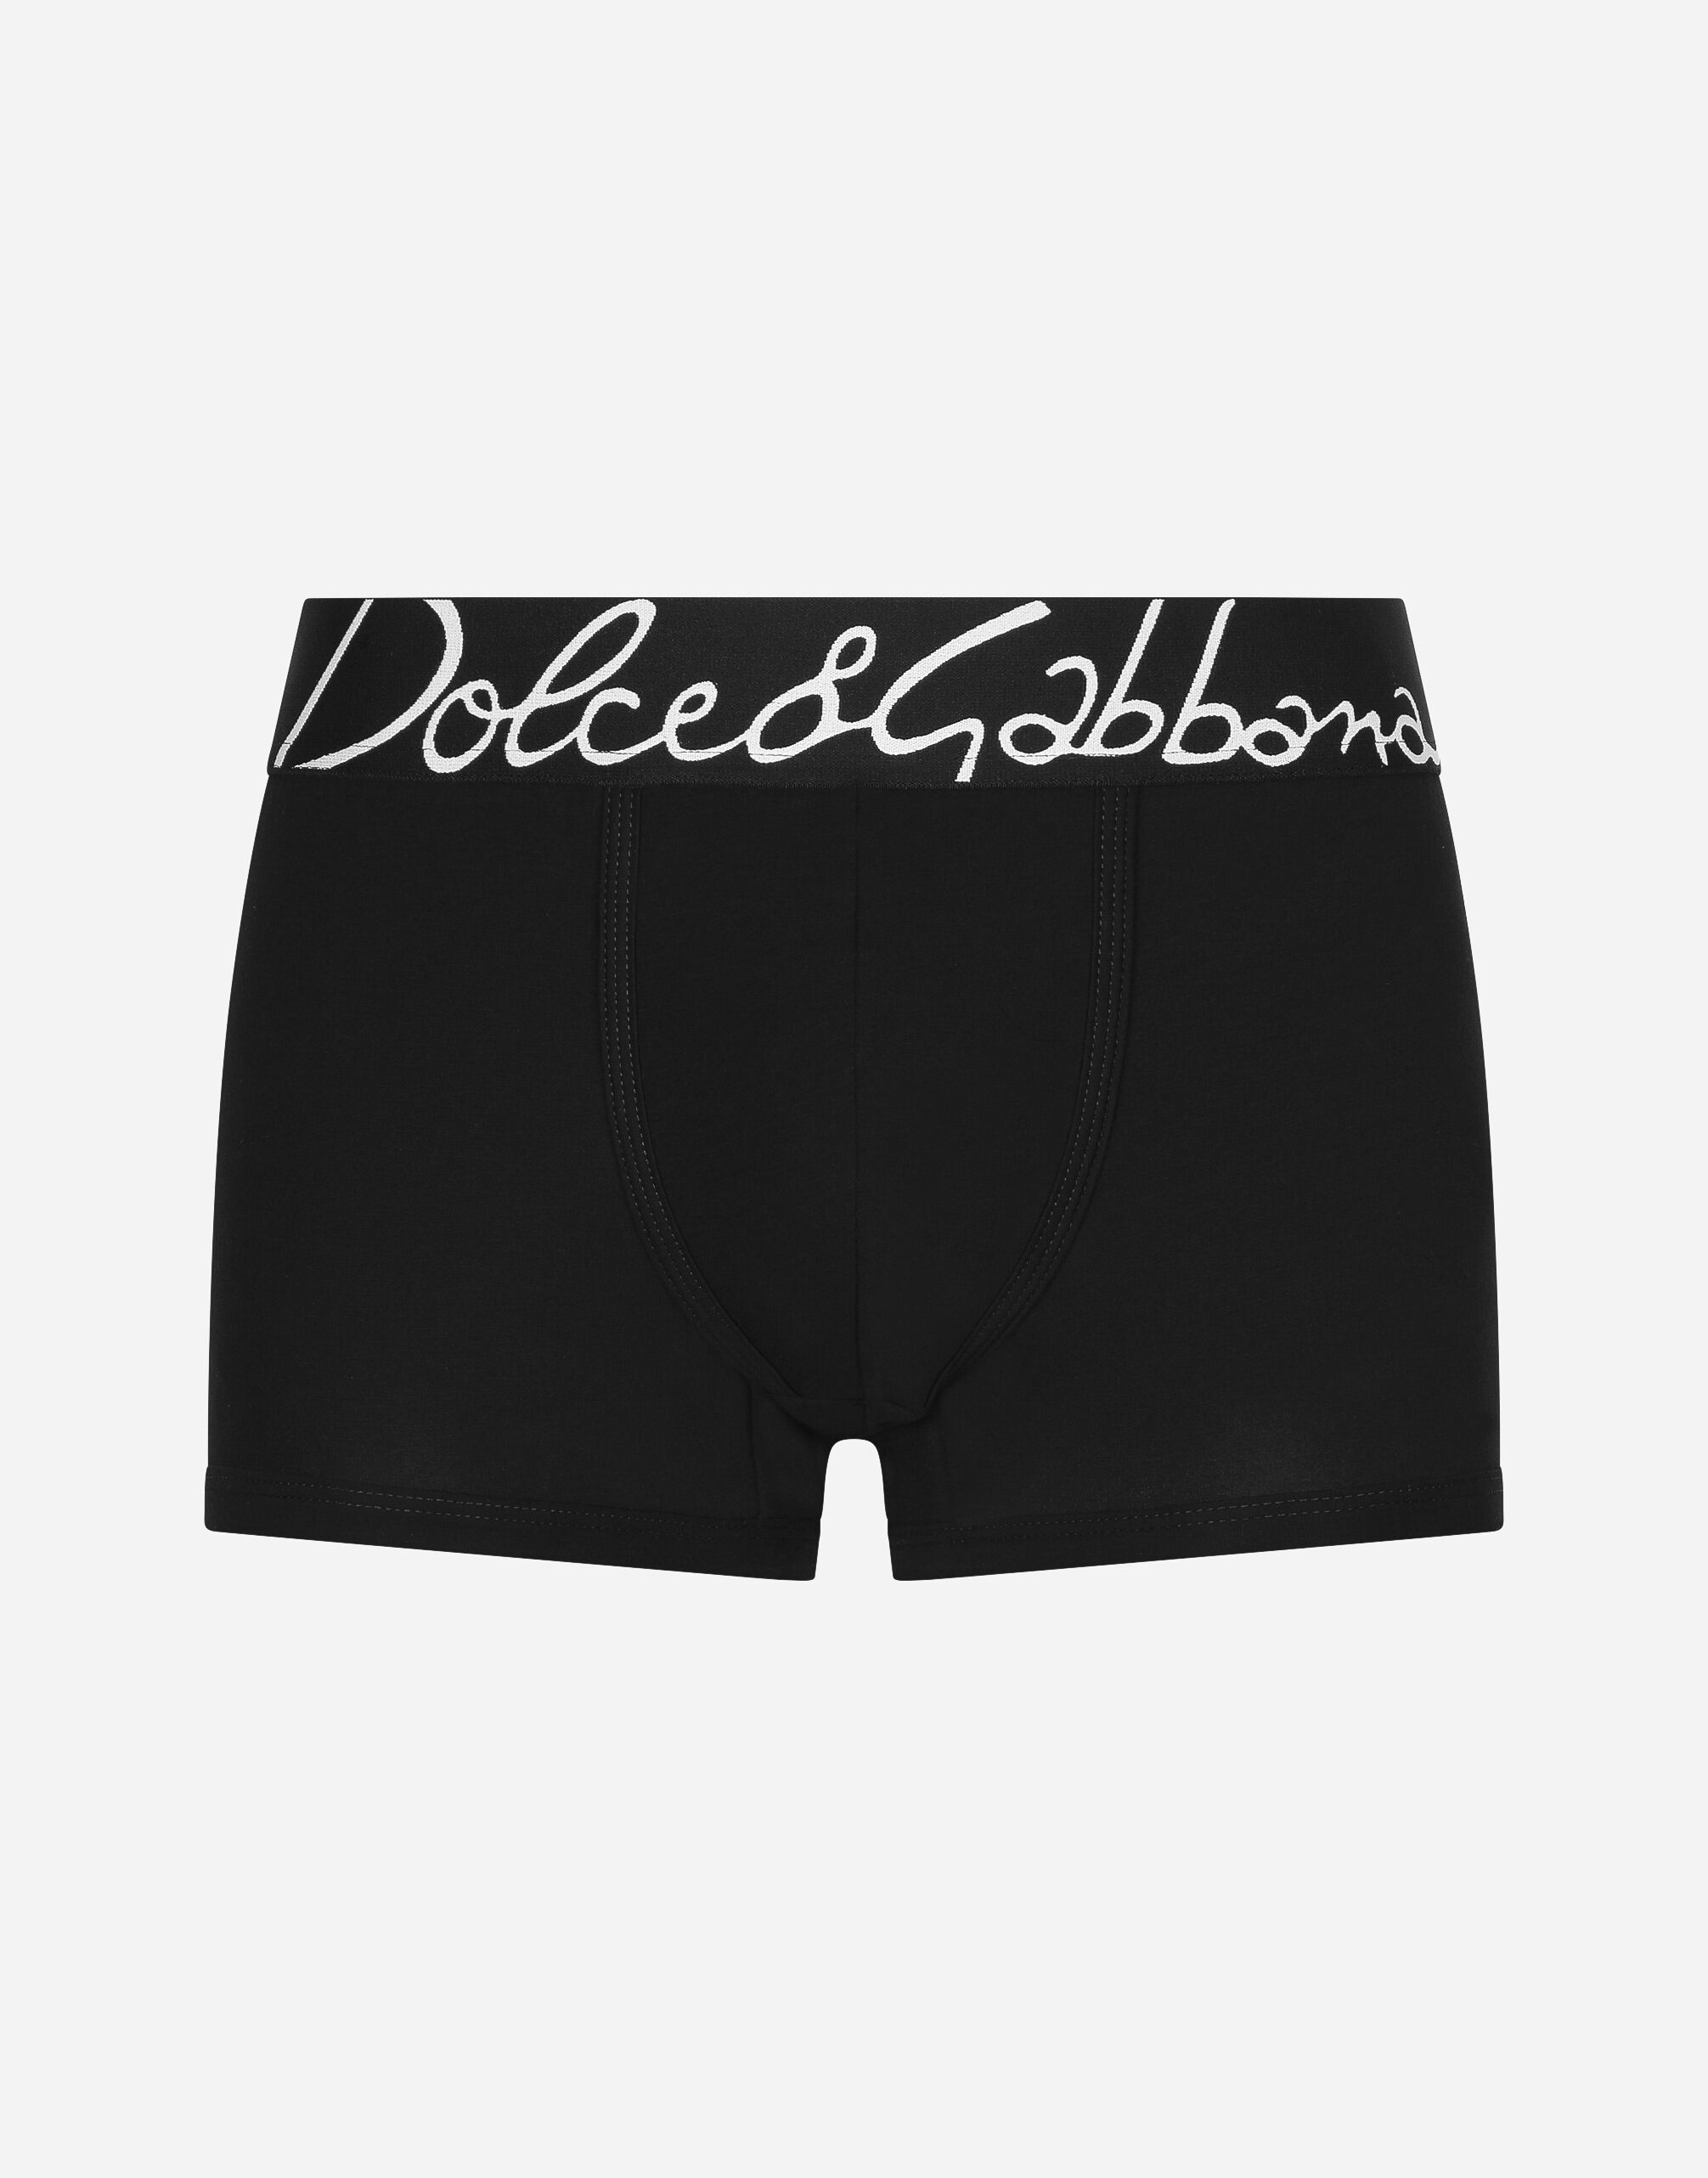 D&G DOLCE & GABBANA Underwear White Invisibility Bra Size 32D